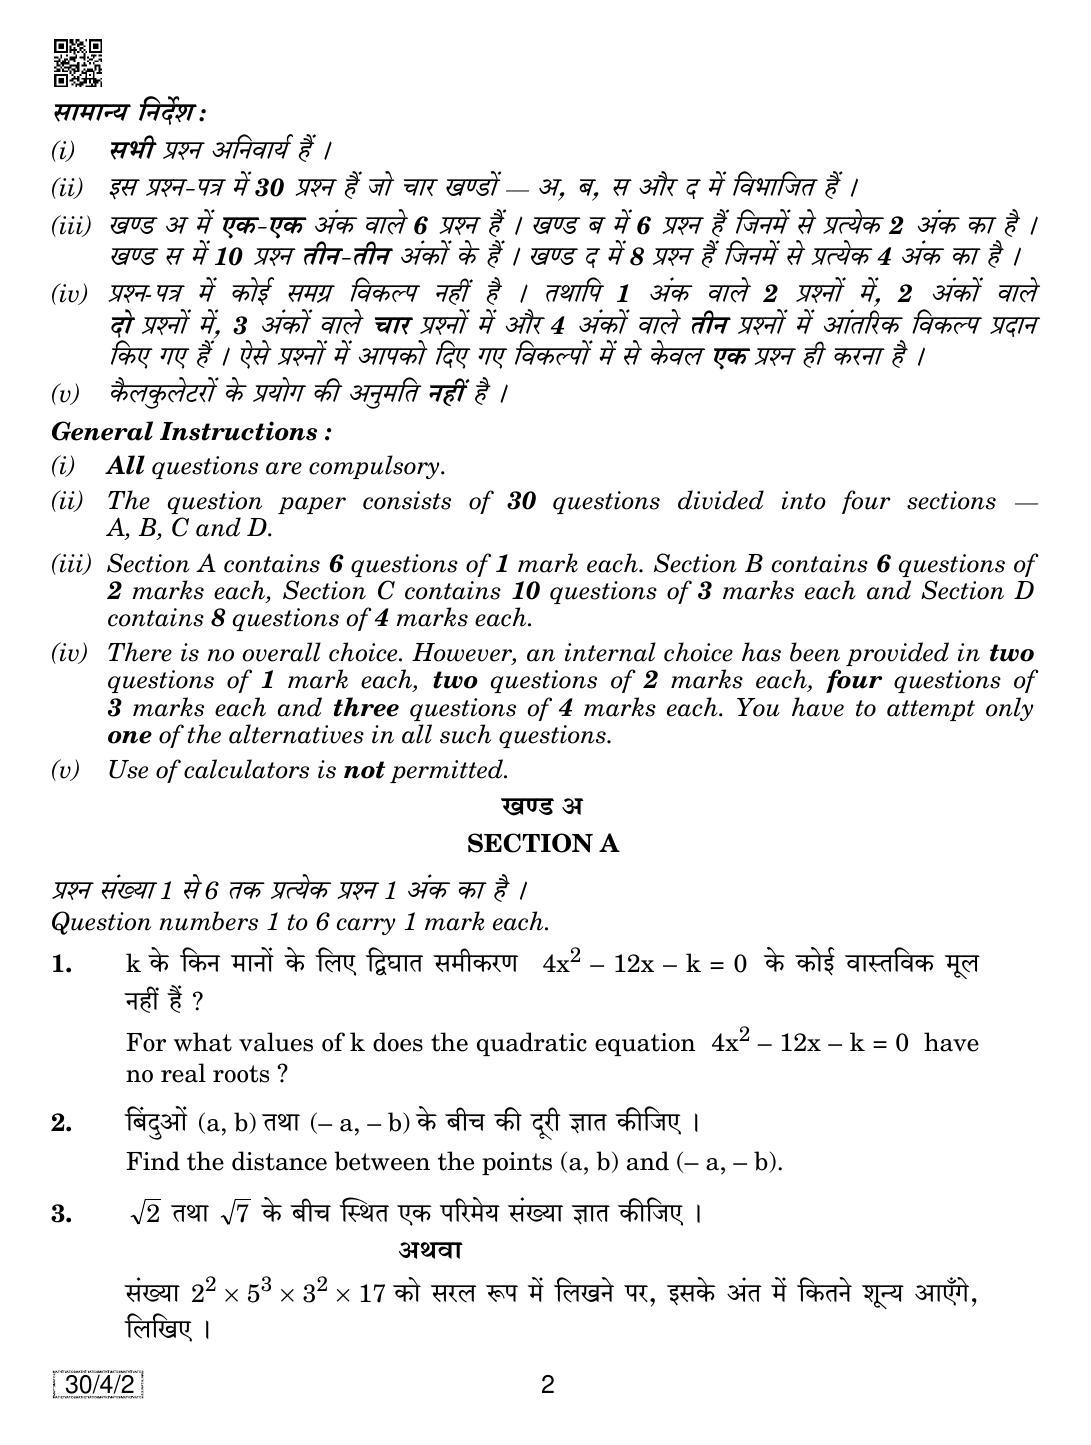 CBSE Class 10 Maths (30/4/2 - SET 2) 2019 Question Paper - Page 2